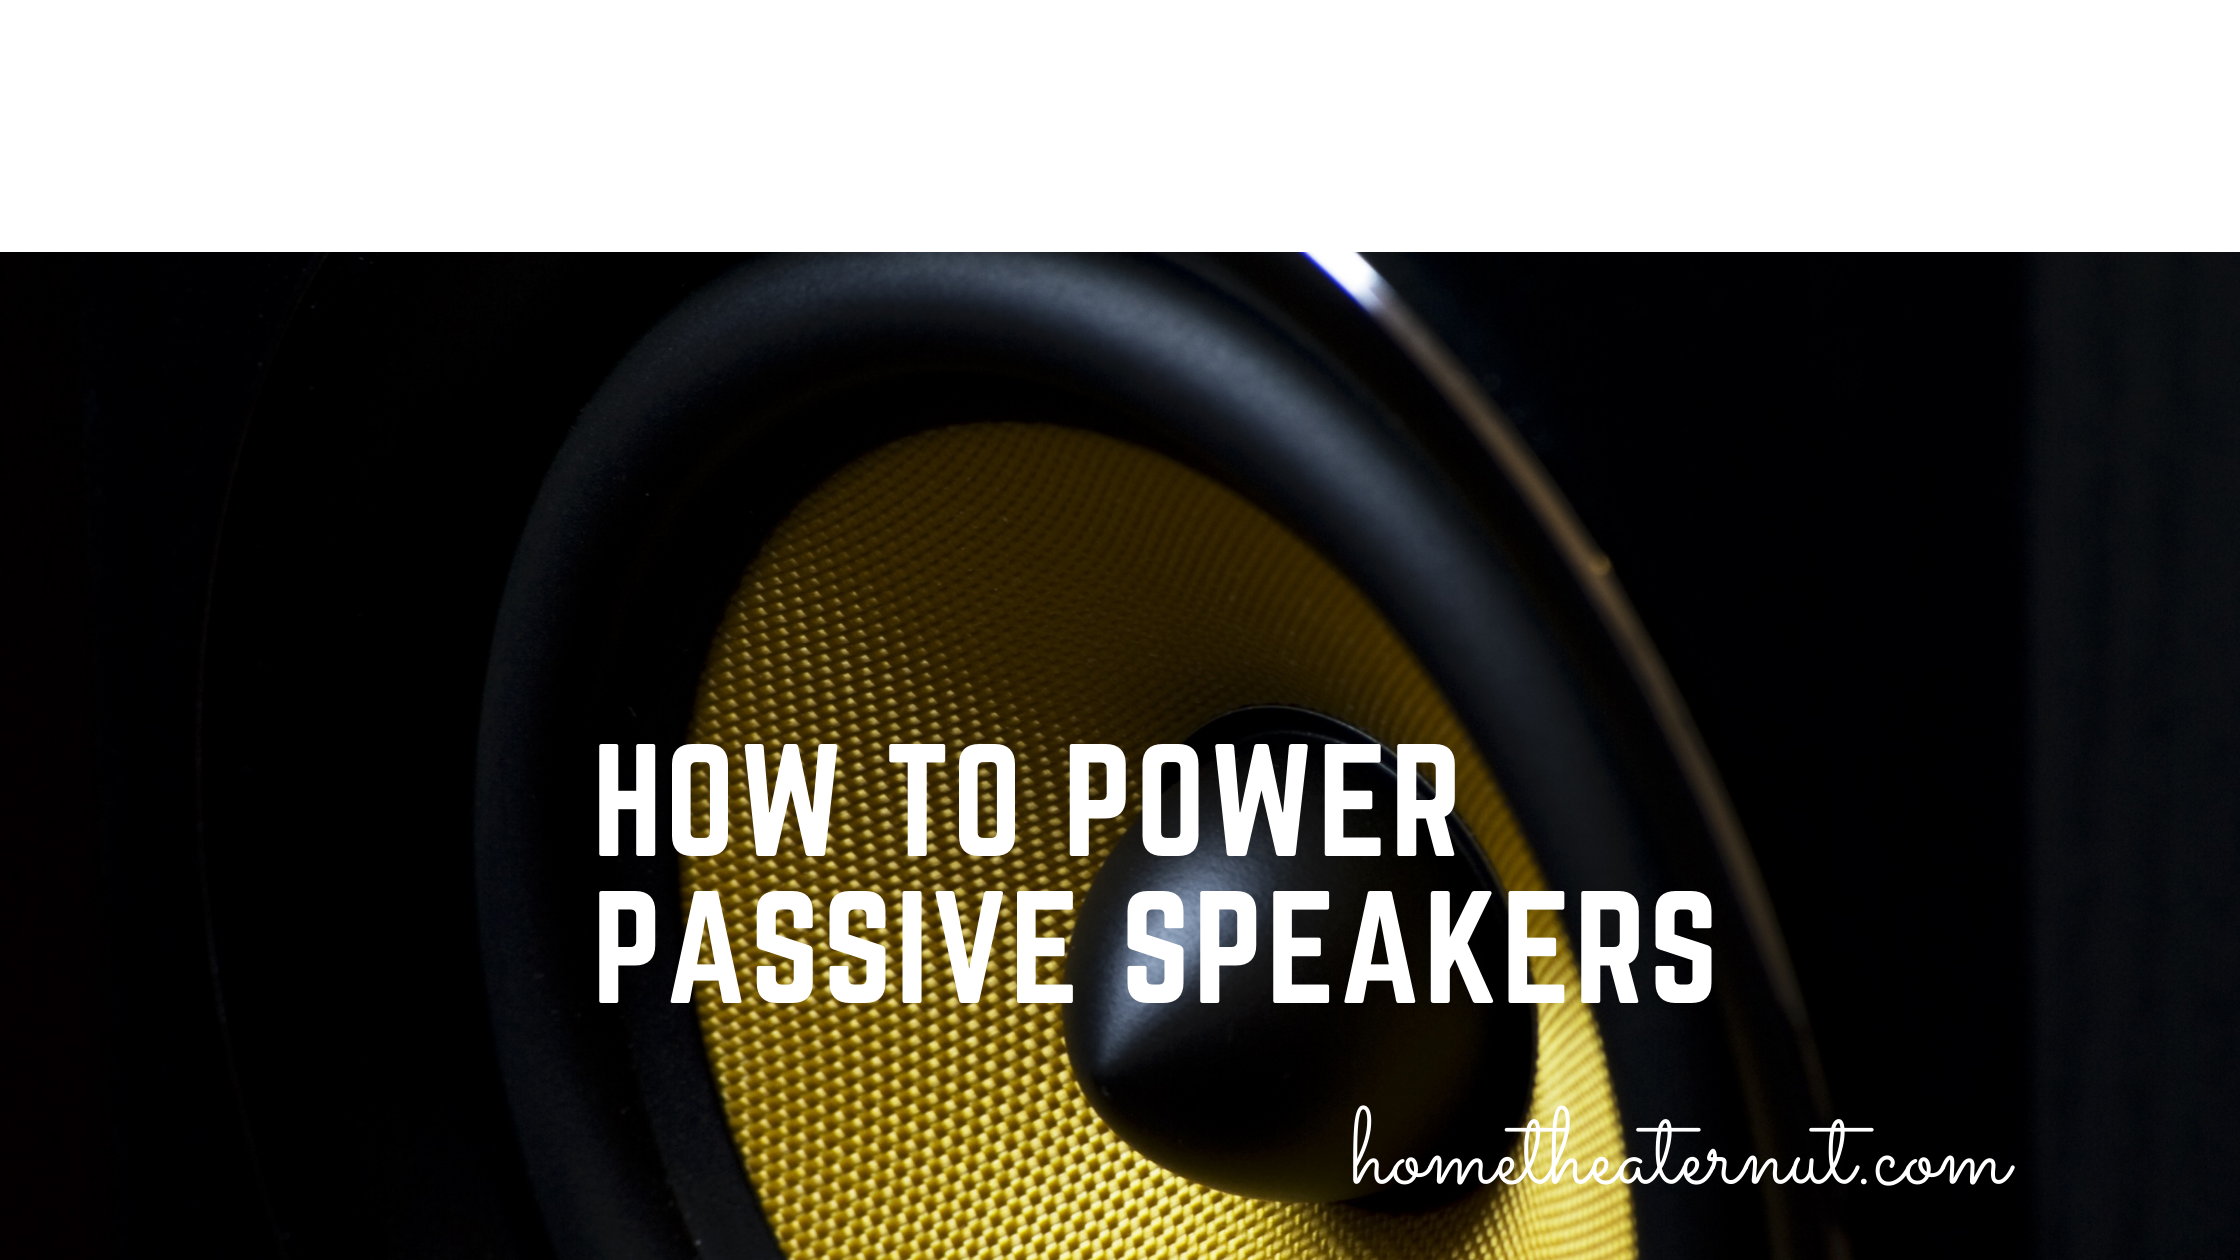 How to Power Passive Speakers